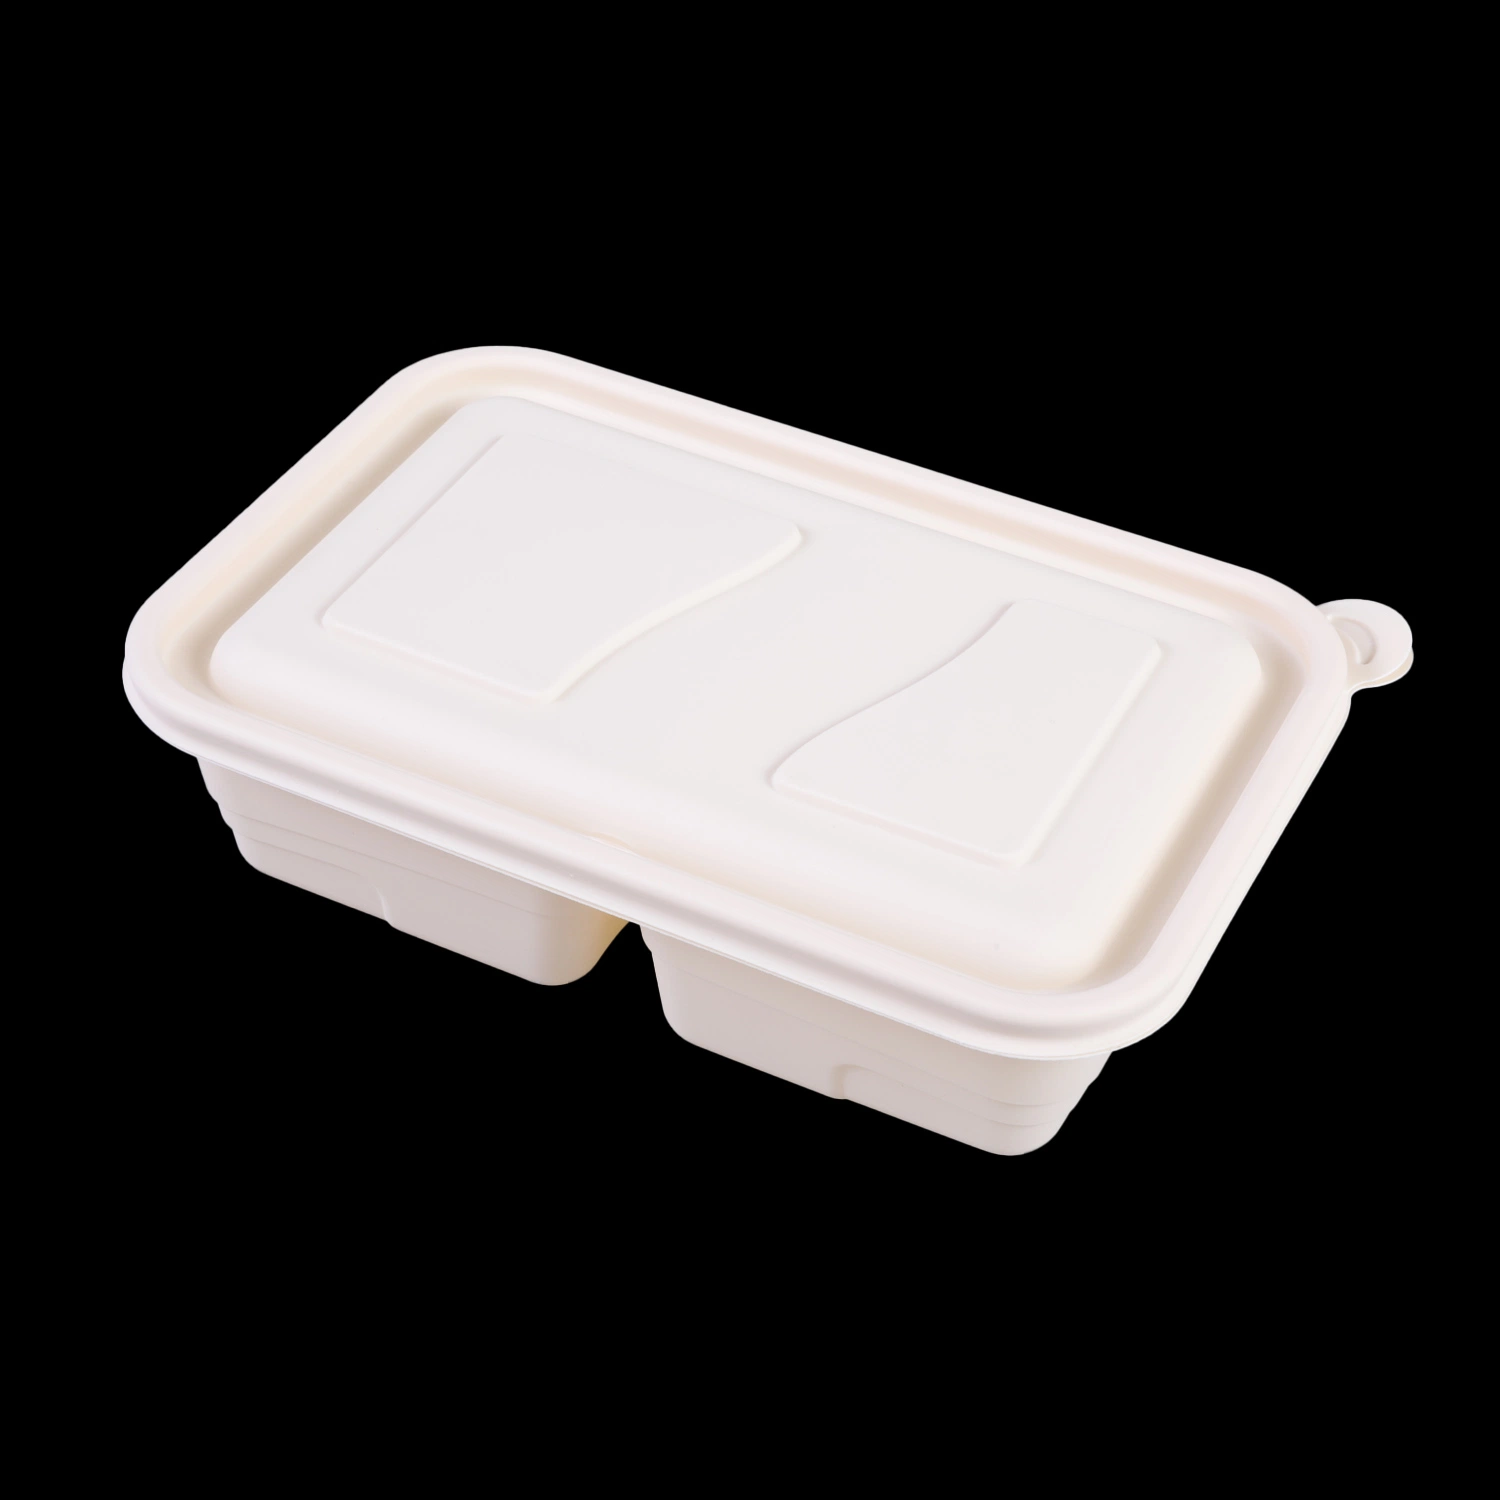 Einweg-Food-Box Lebensmittelbehälter mit biologisch abbaubarem Maisstärke Material